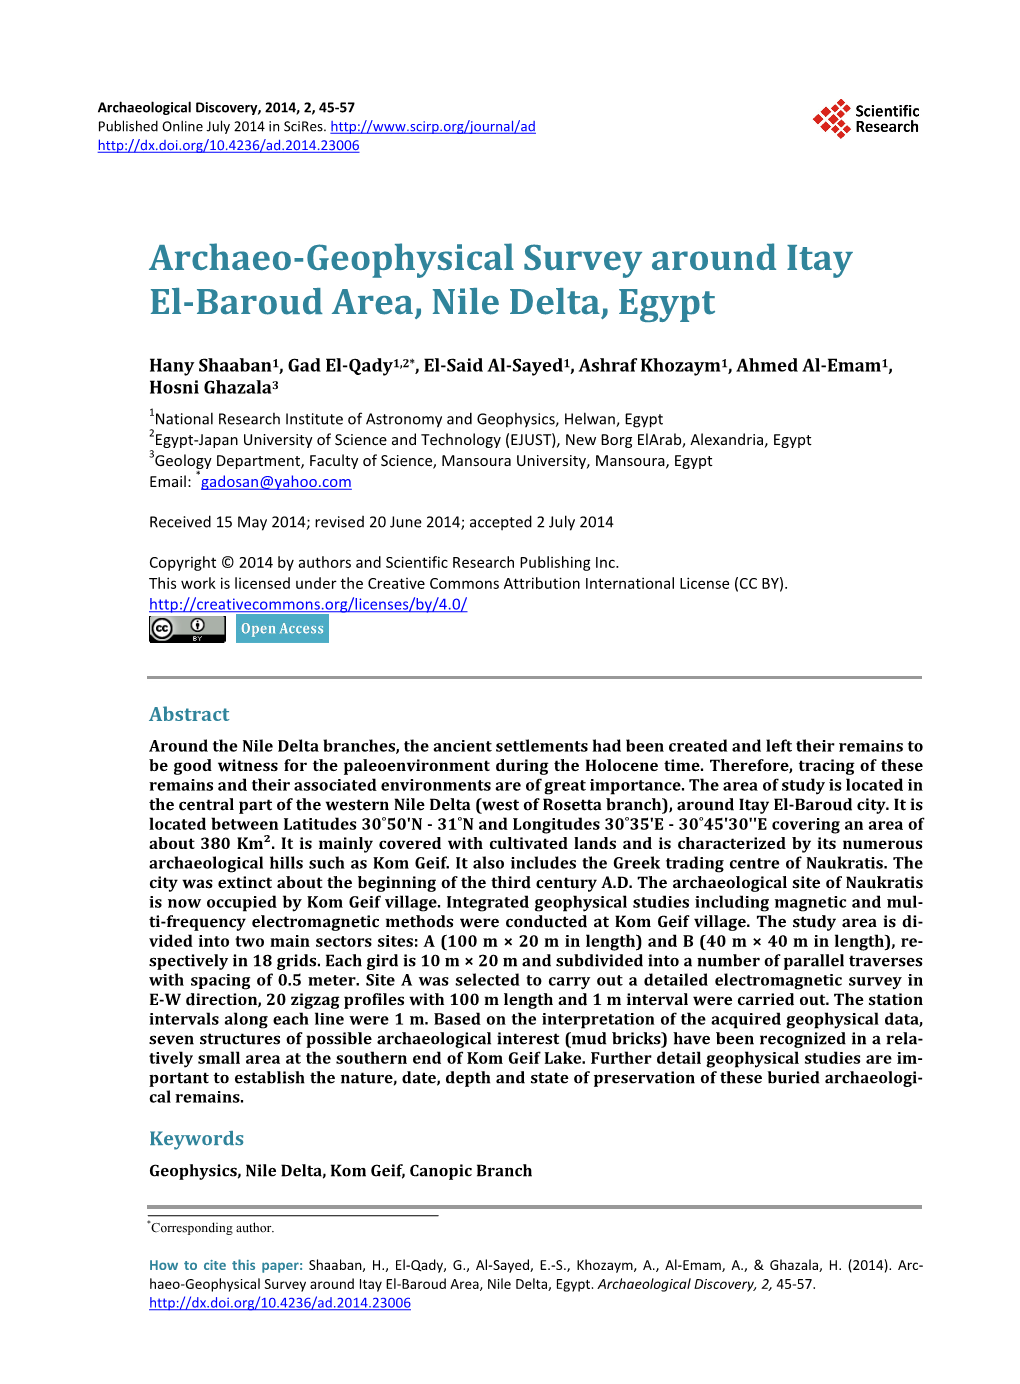 Archaeo-Geophysical Survey Around Itay El-Baroud Area, Nile Delta, Egypt